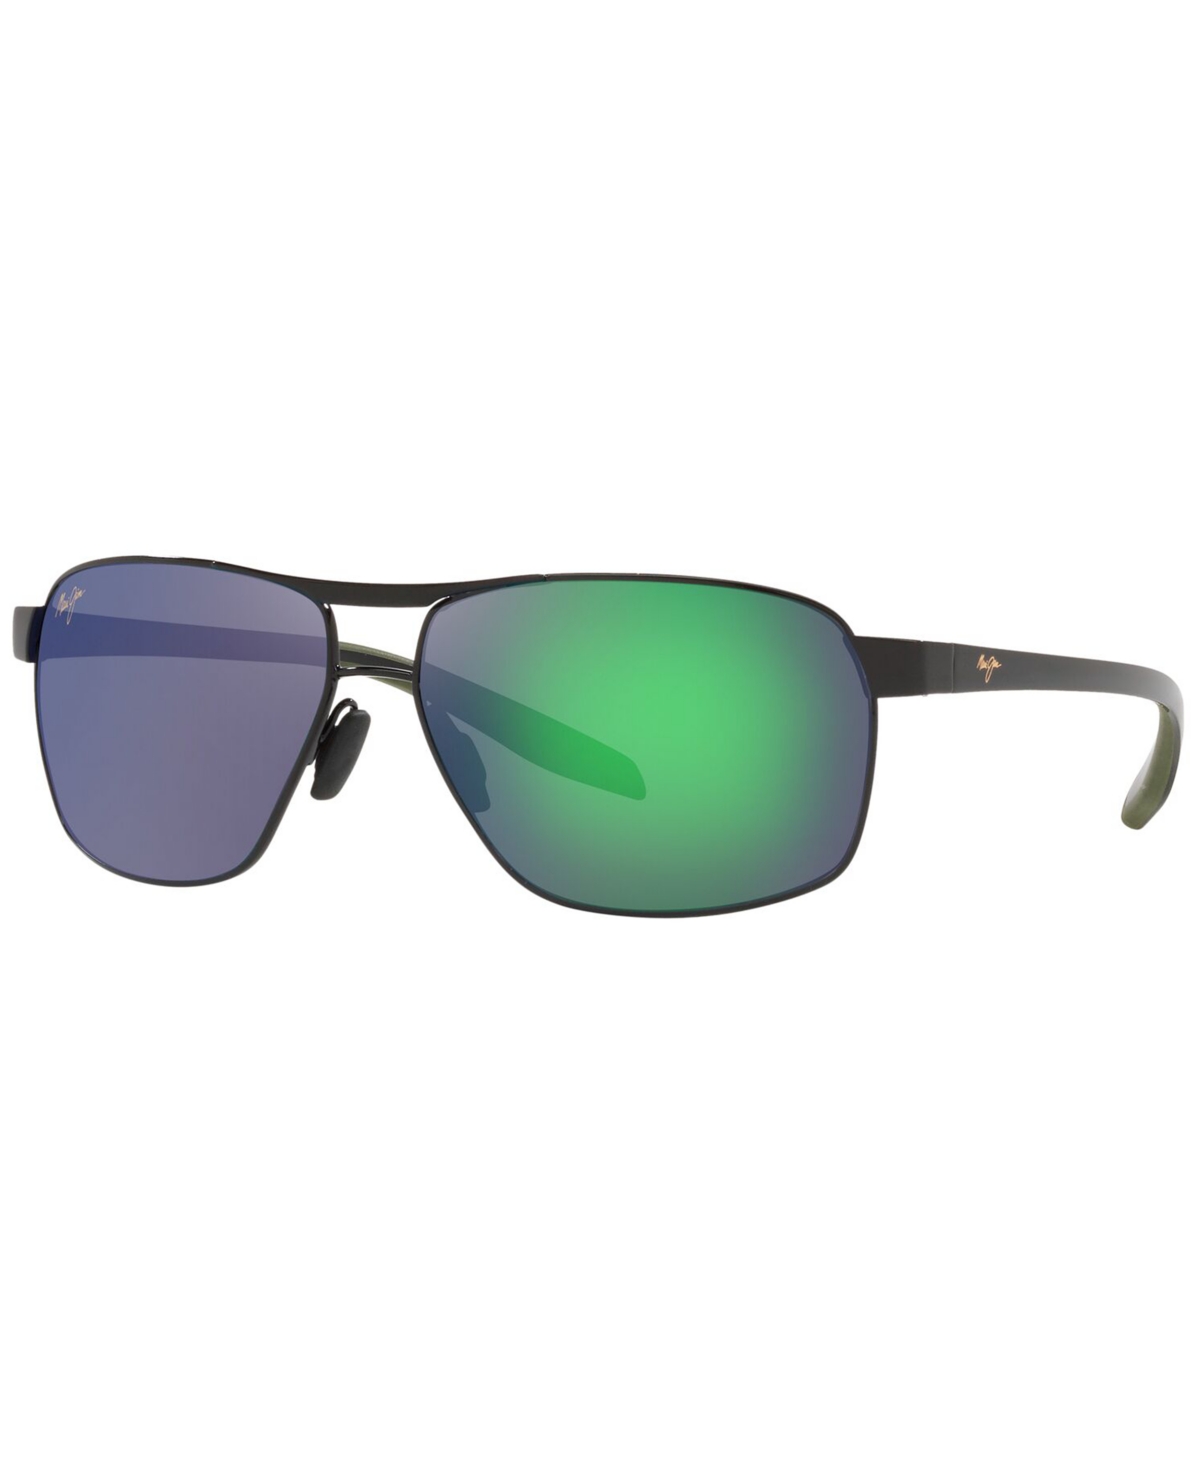 Men's Polarized Sunglasses, The Bird 62 - BLACK/GREEN MIRROR POLAR